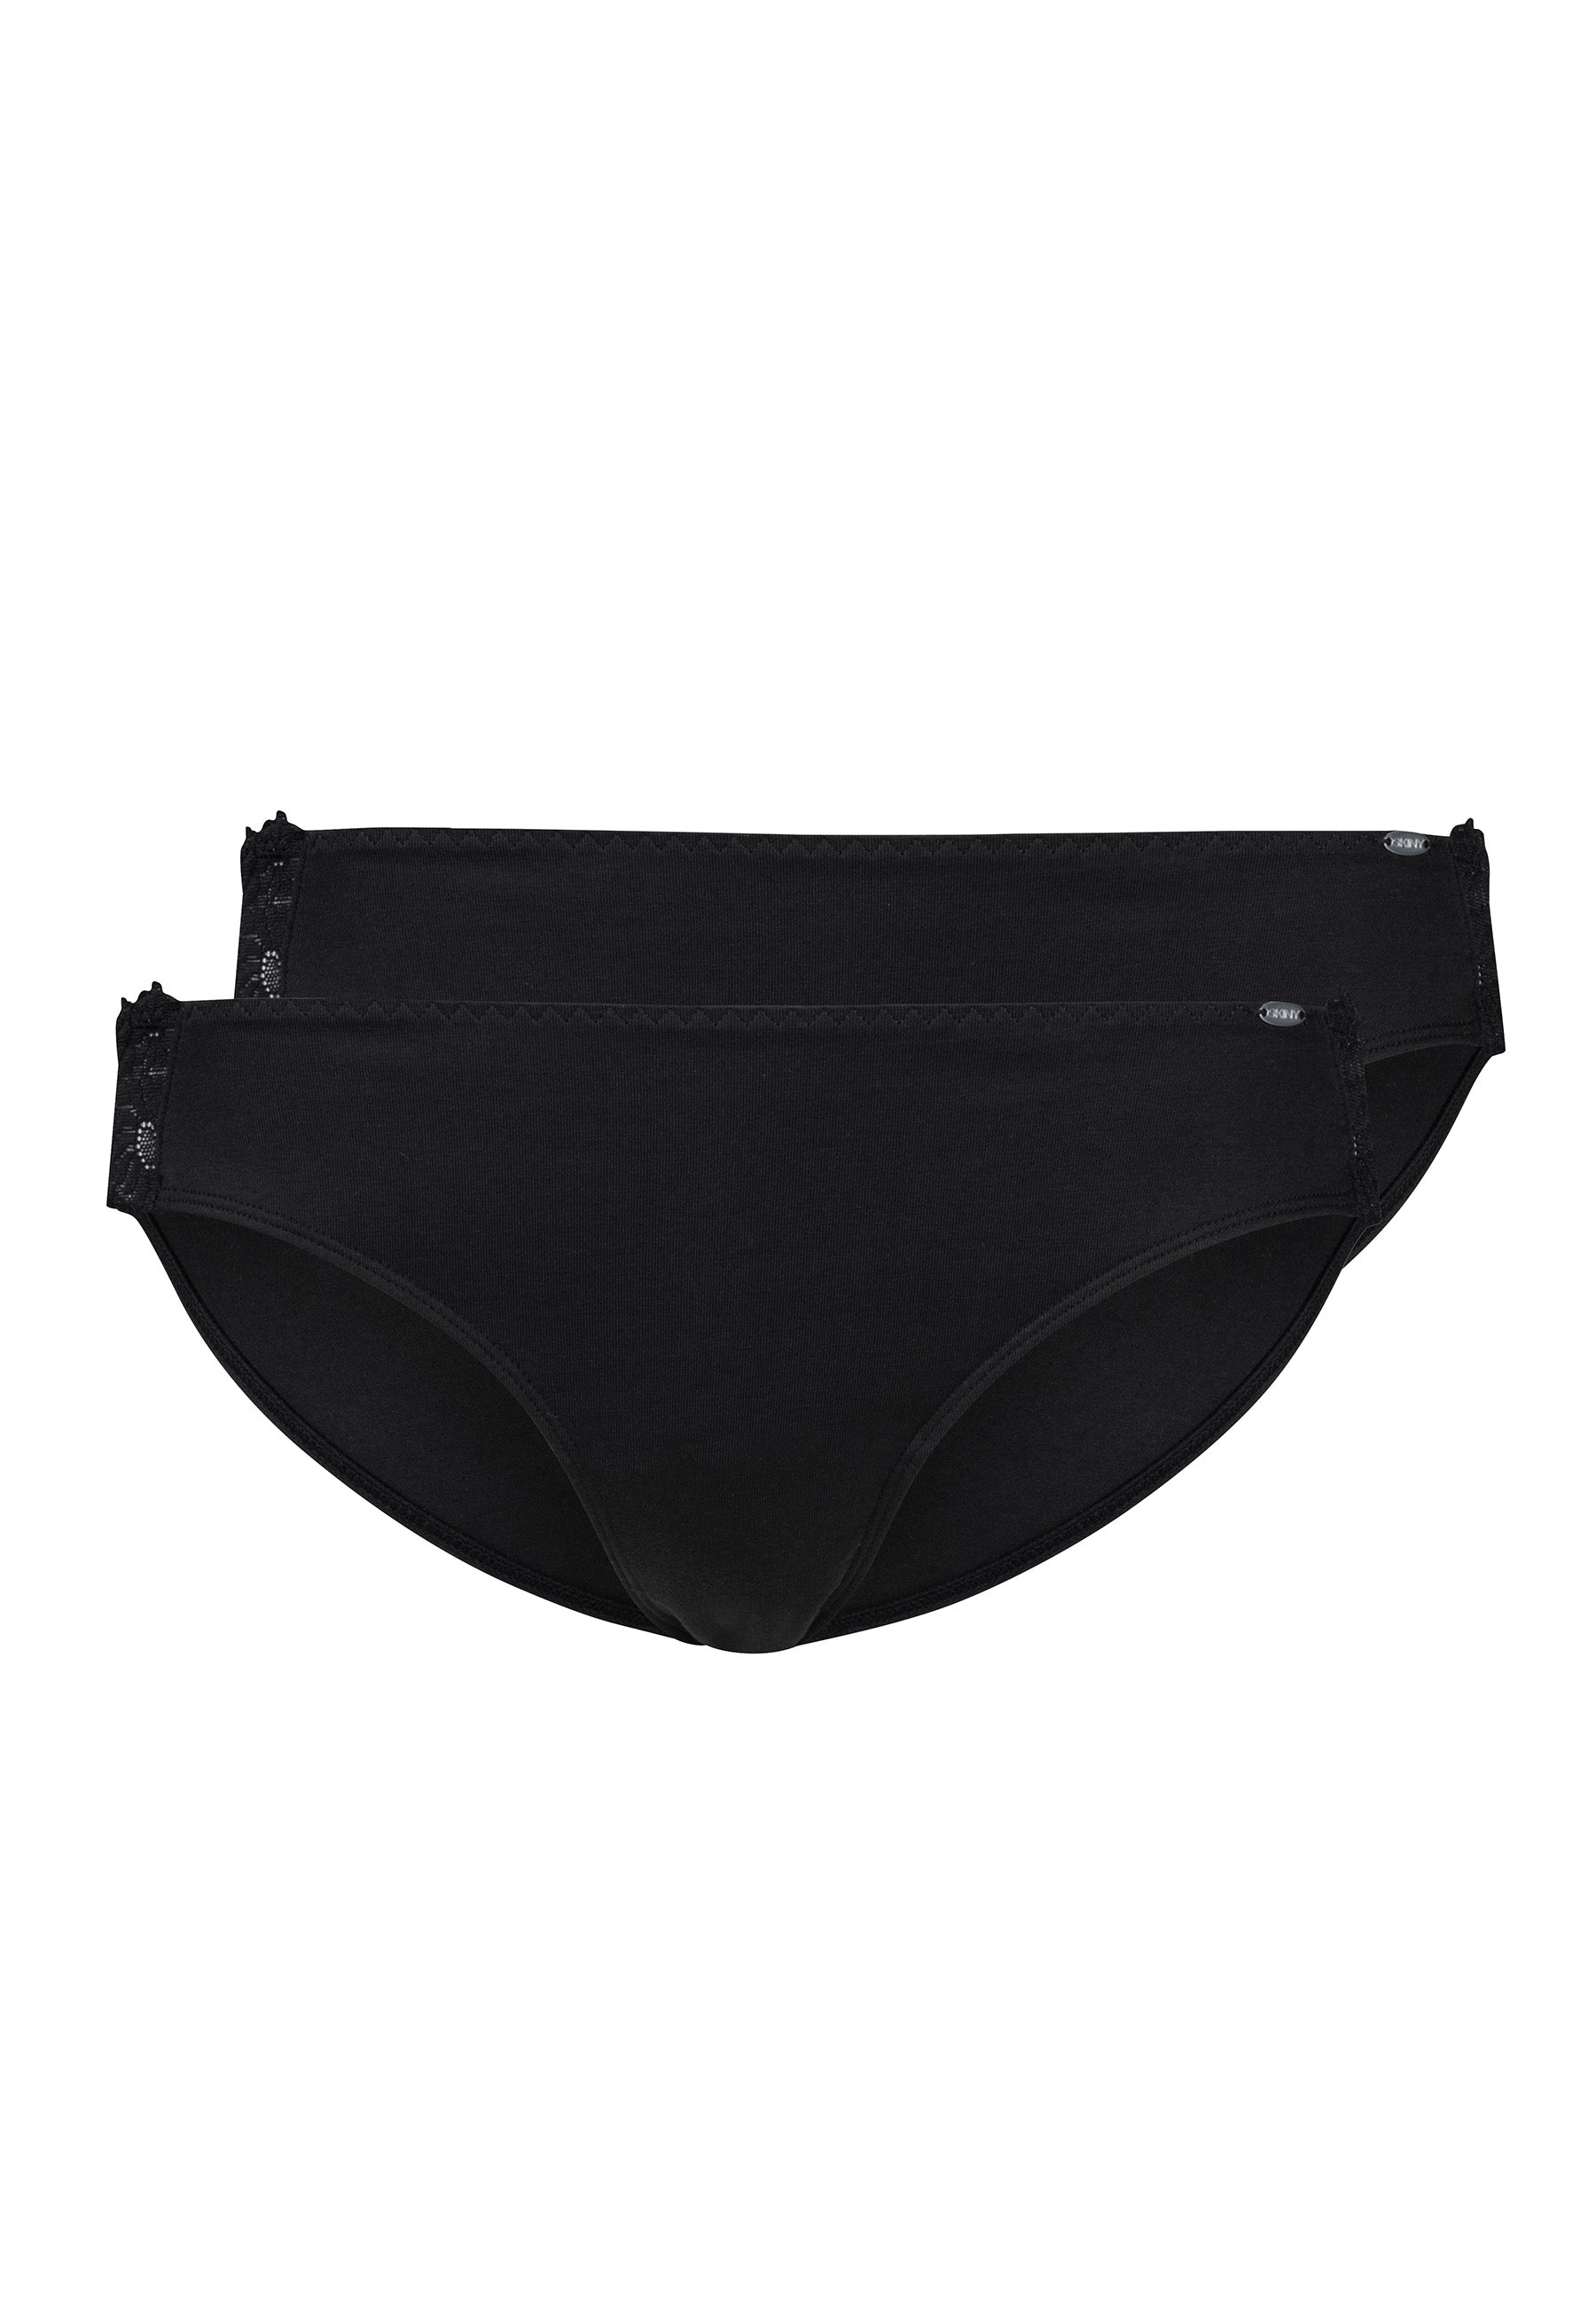 Skiny Every Day In CottonLace Multipack Damen Rio Slip 2er Pack (Black)